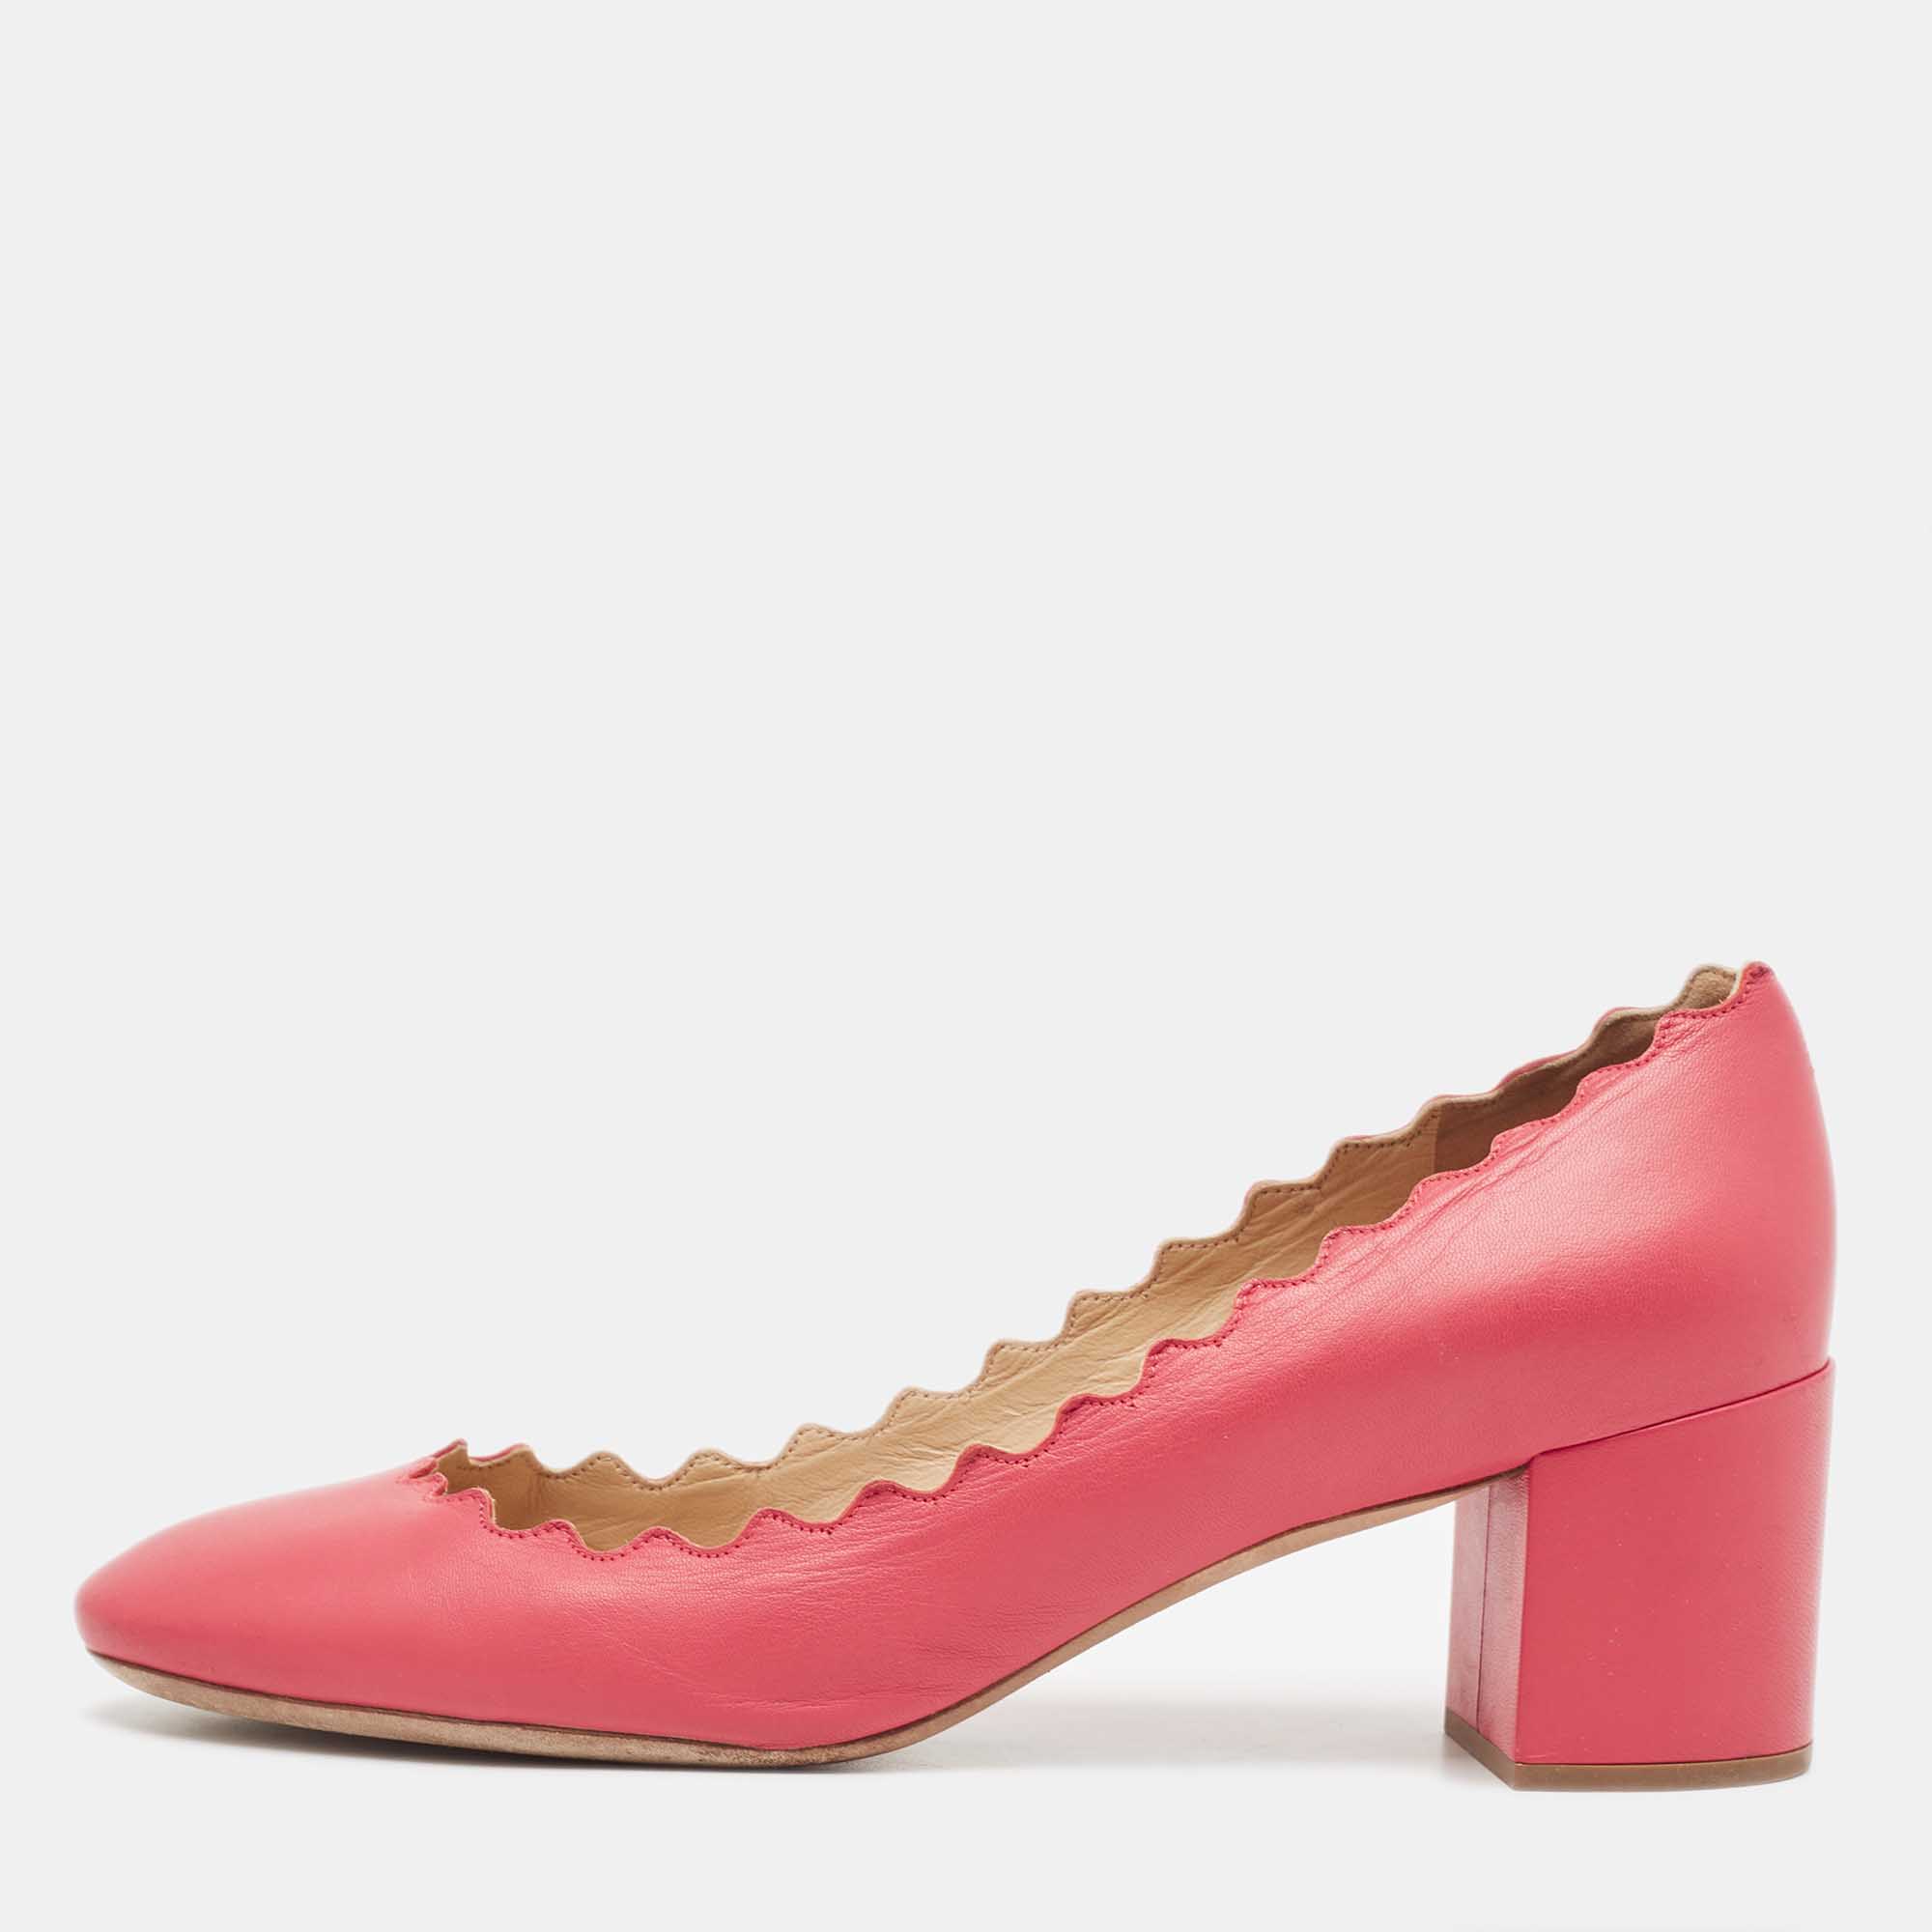 Chloe coral pink scalloped leather lauren block heel pumps size 38.5